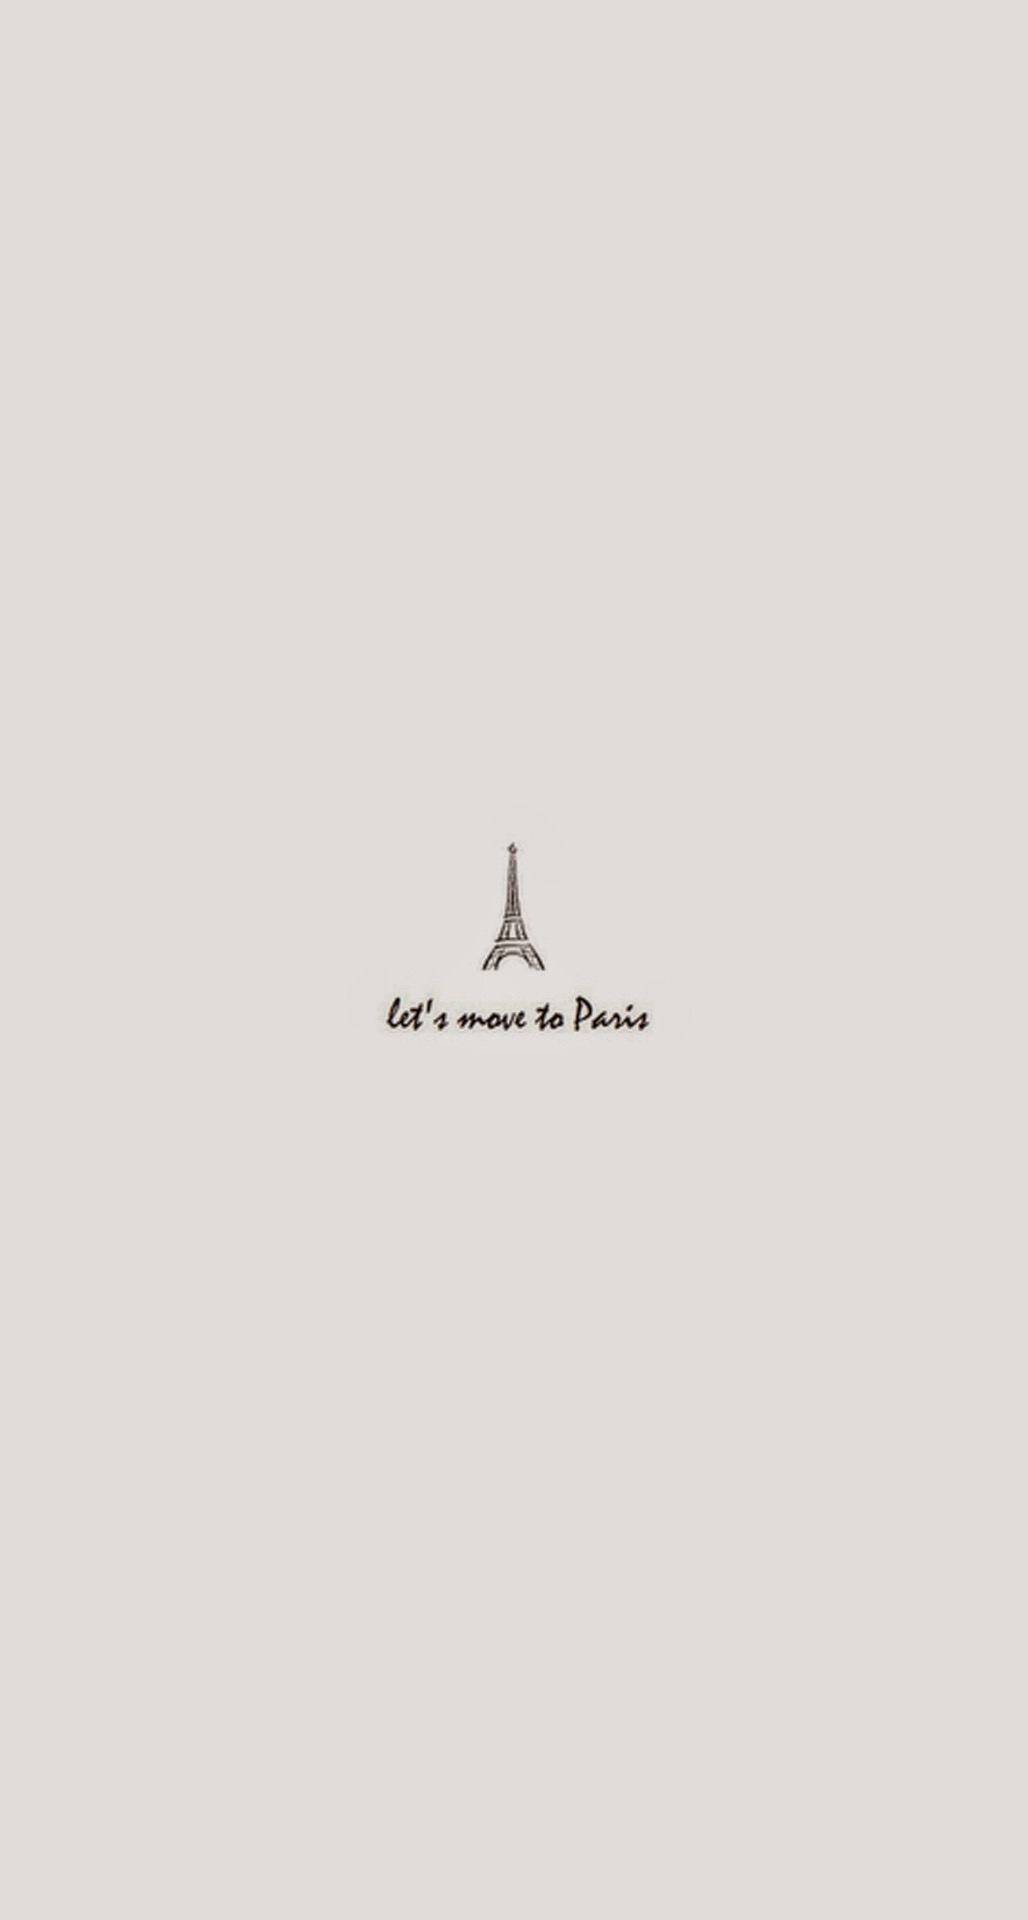 Move To Paris Minimal iPhone Plus HD Wallpaper Ipod